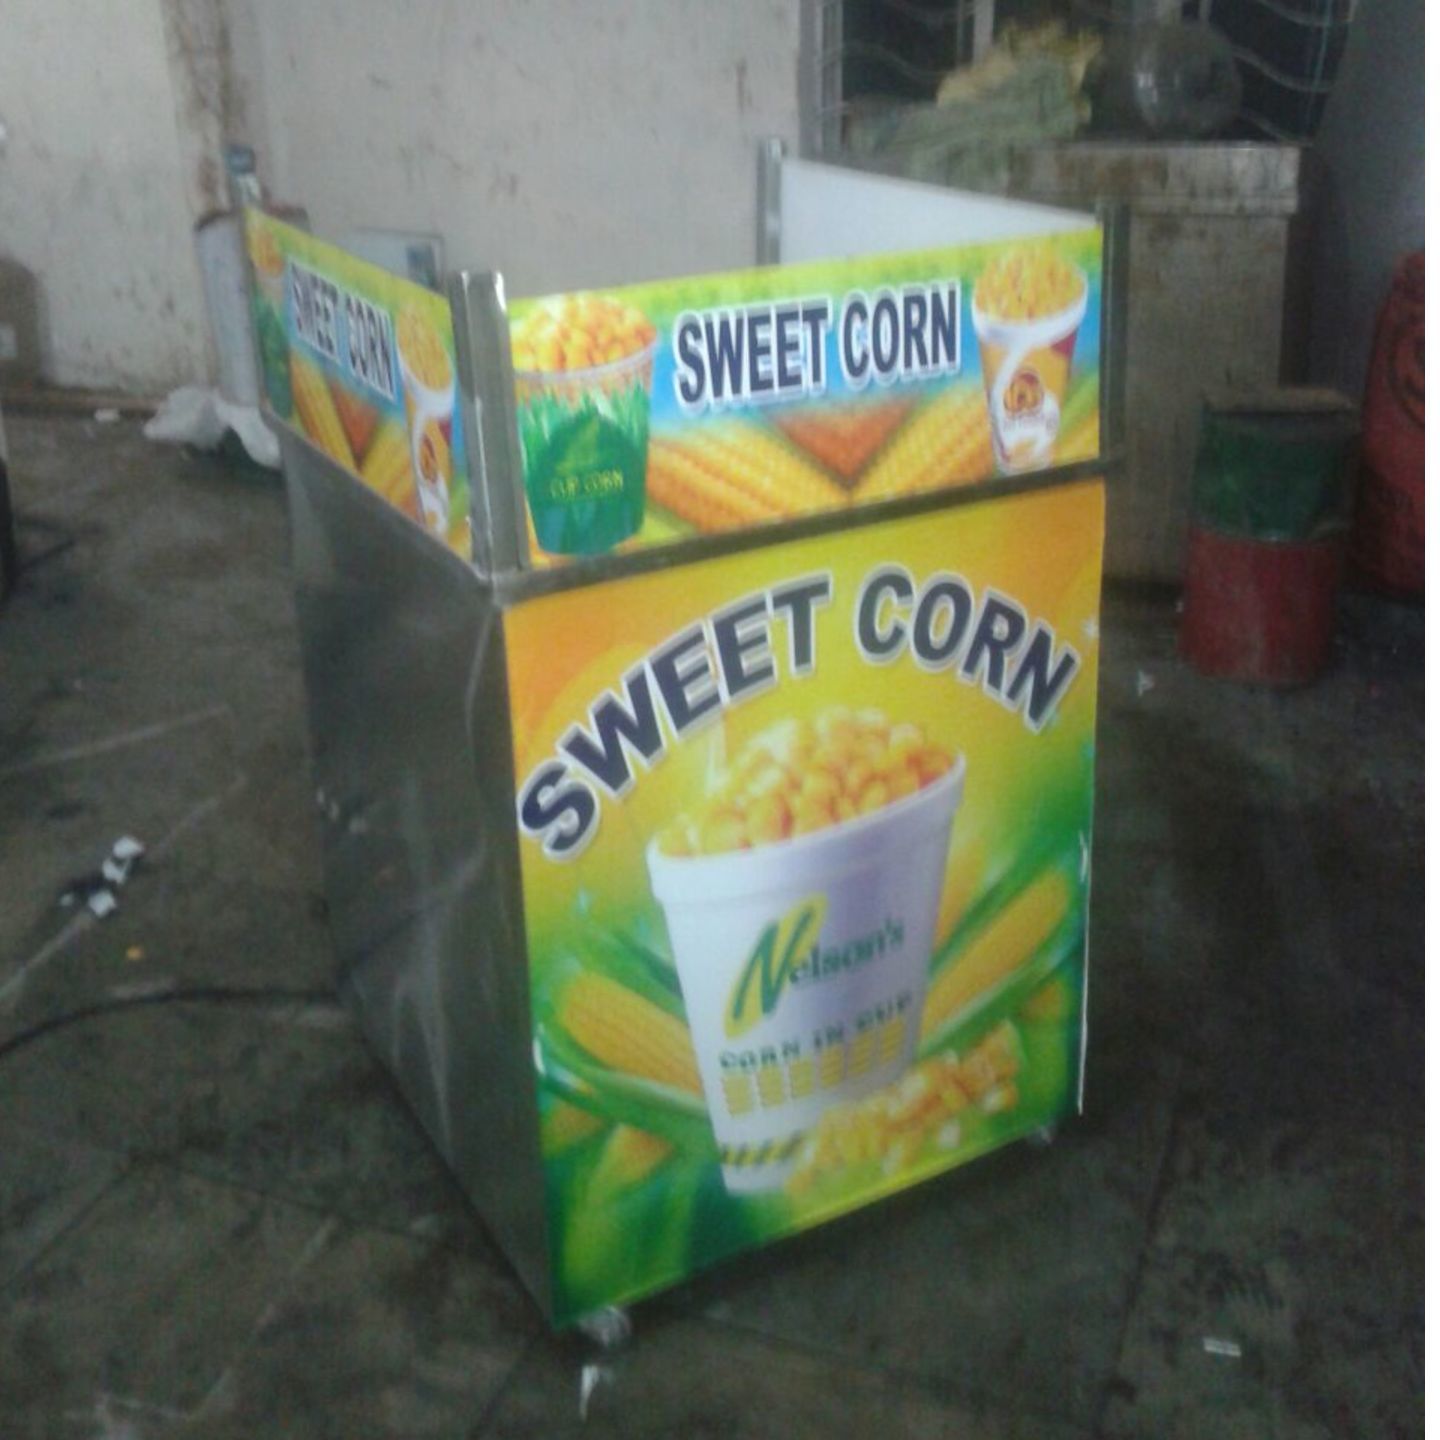 Sweet corn counter